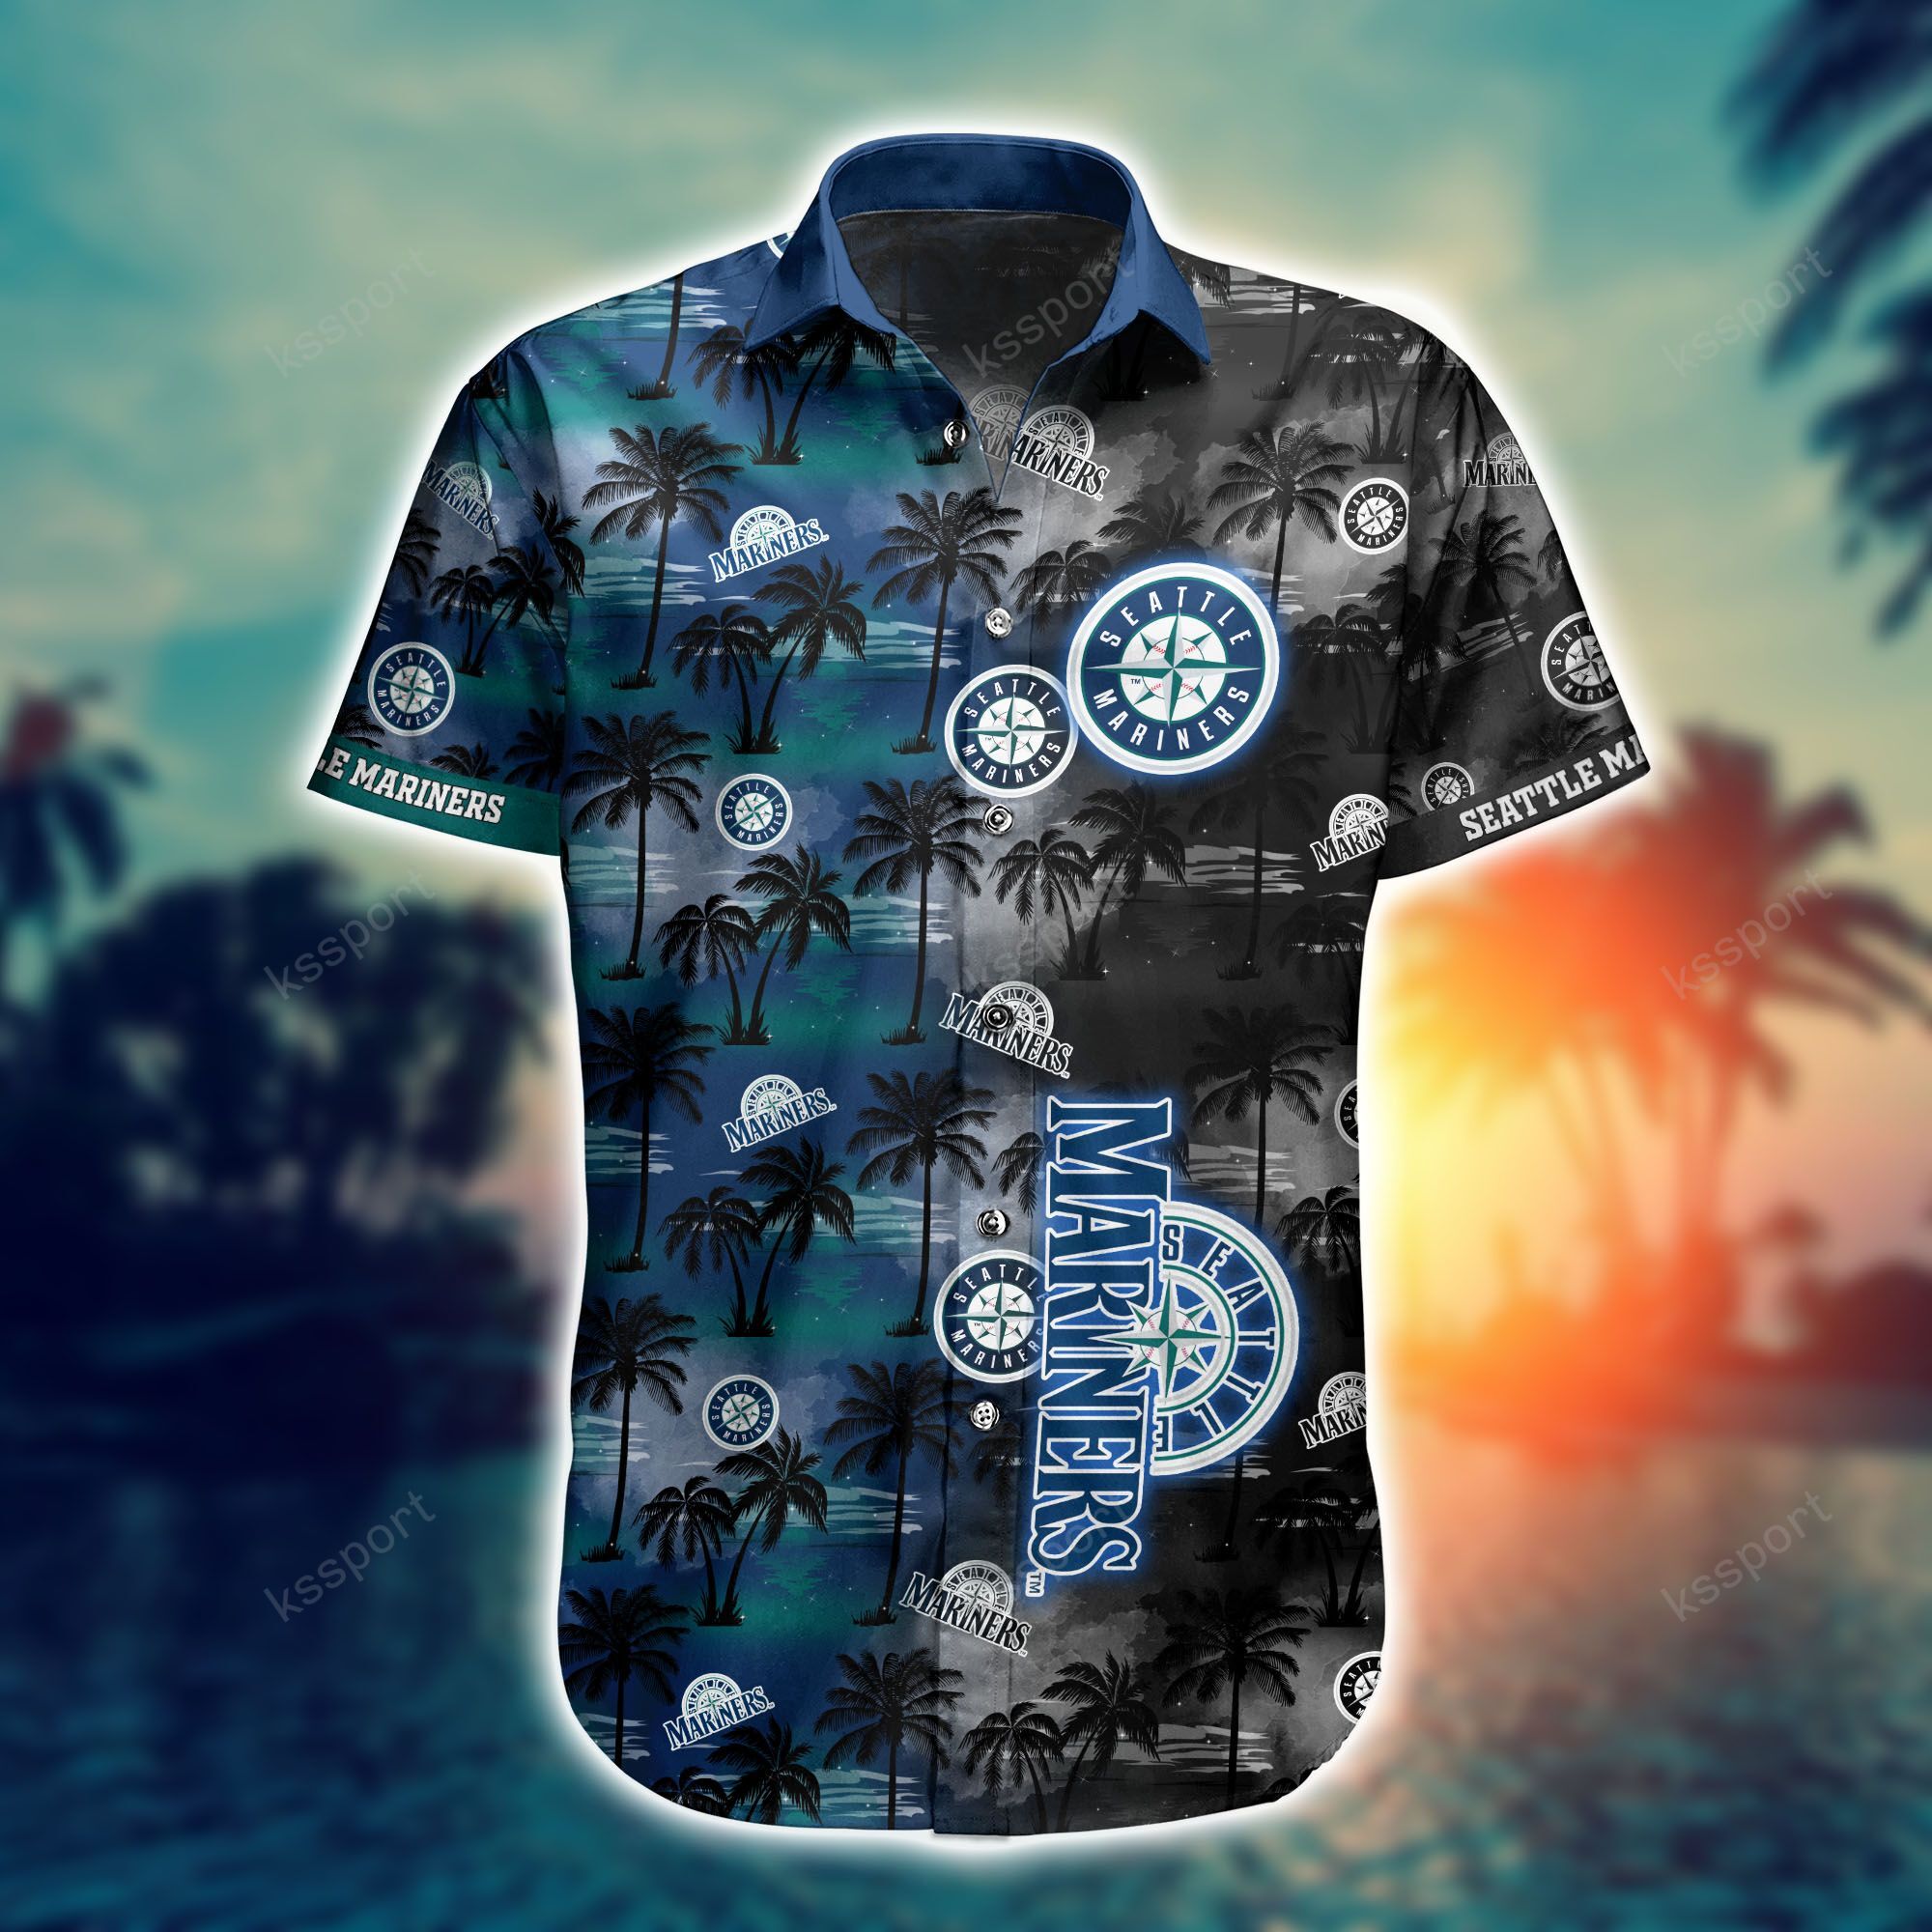 Hawaiian shirt and shorts is a great way to look stylish at a beach party 154